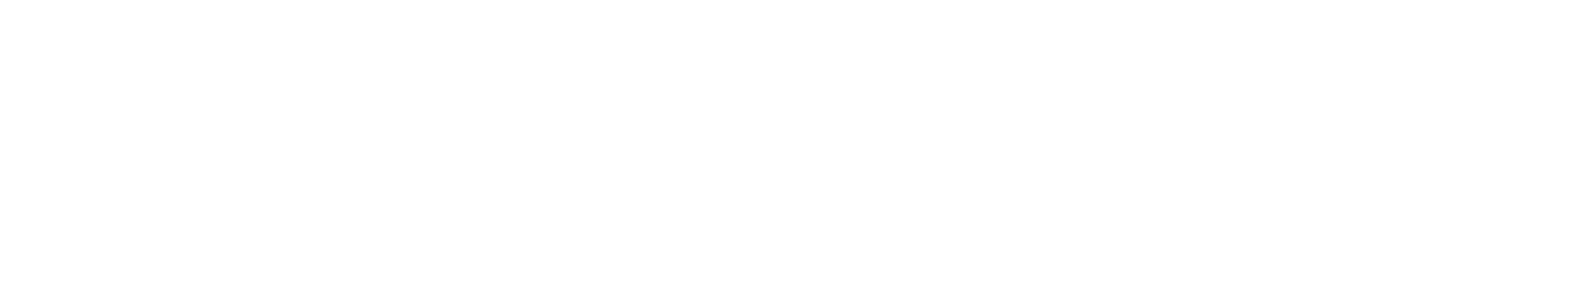 Munters Group AB logo large for dark backgrounds (transparent PNG)